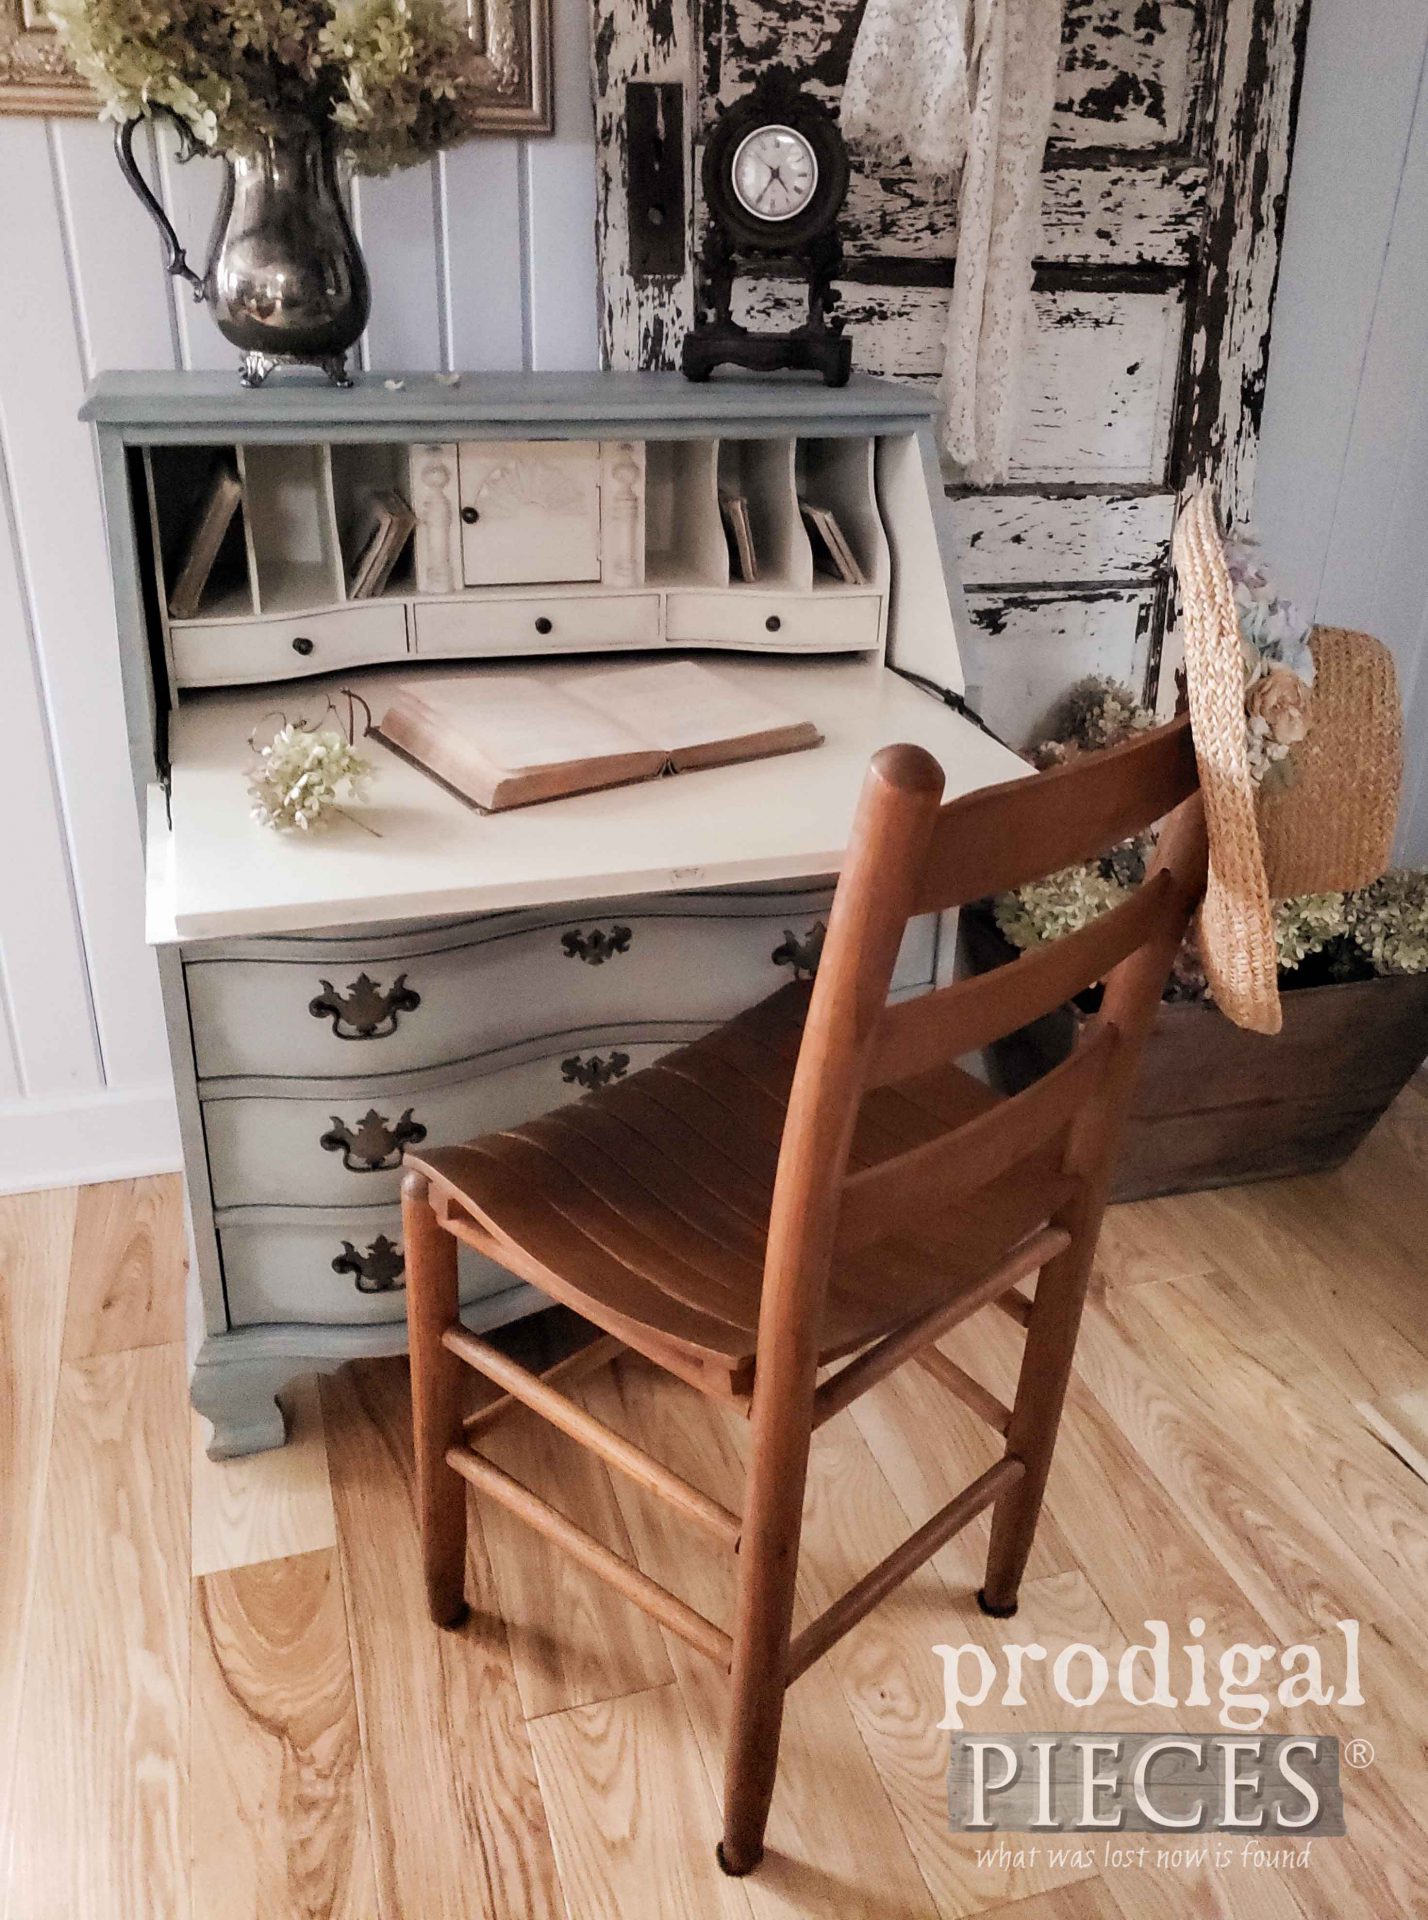 Farmhouse Chic Vintage Secretary Desk by Larissa of Prodigal Pieces | prodigalpieces.com #prodigalpieces #diy #home #furniture #vintage #cottage #farmhouse